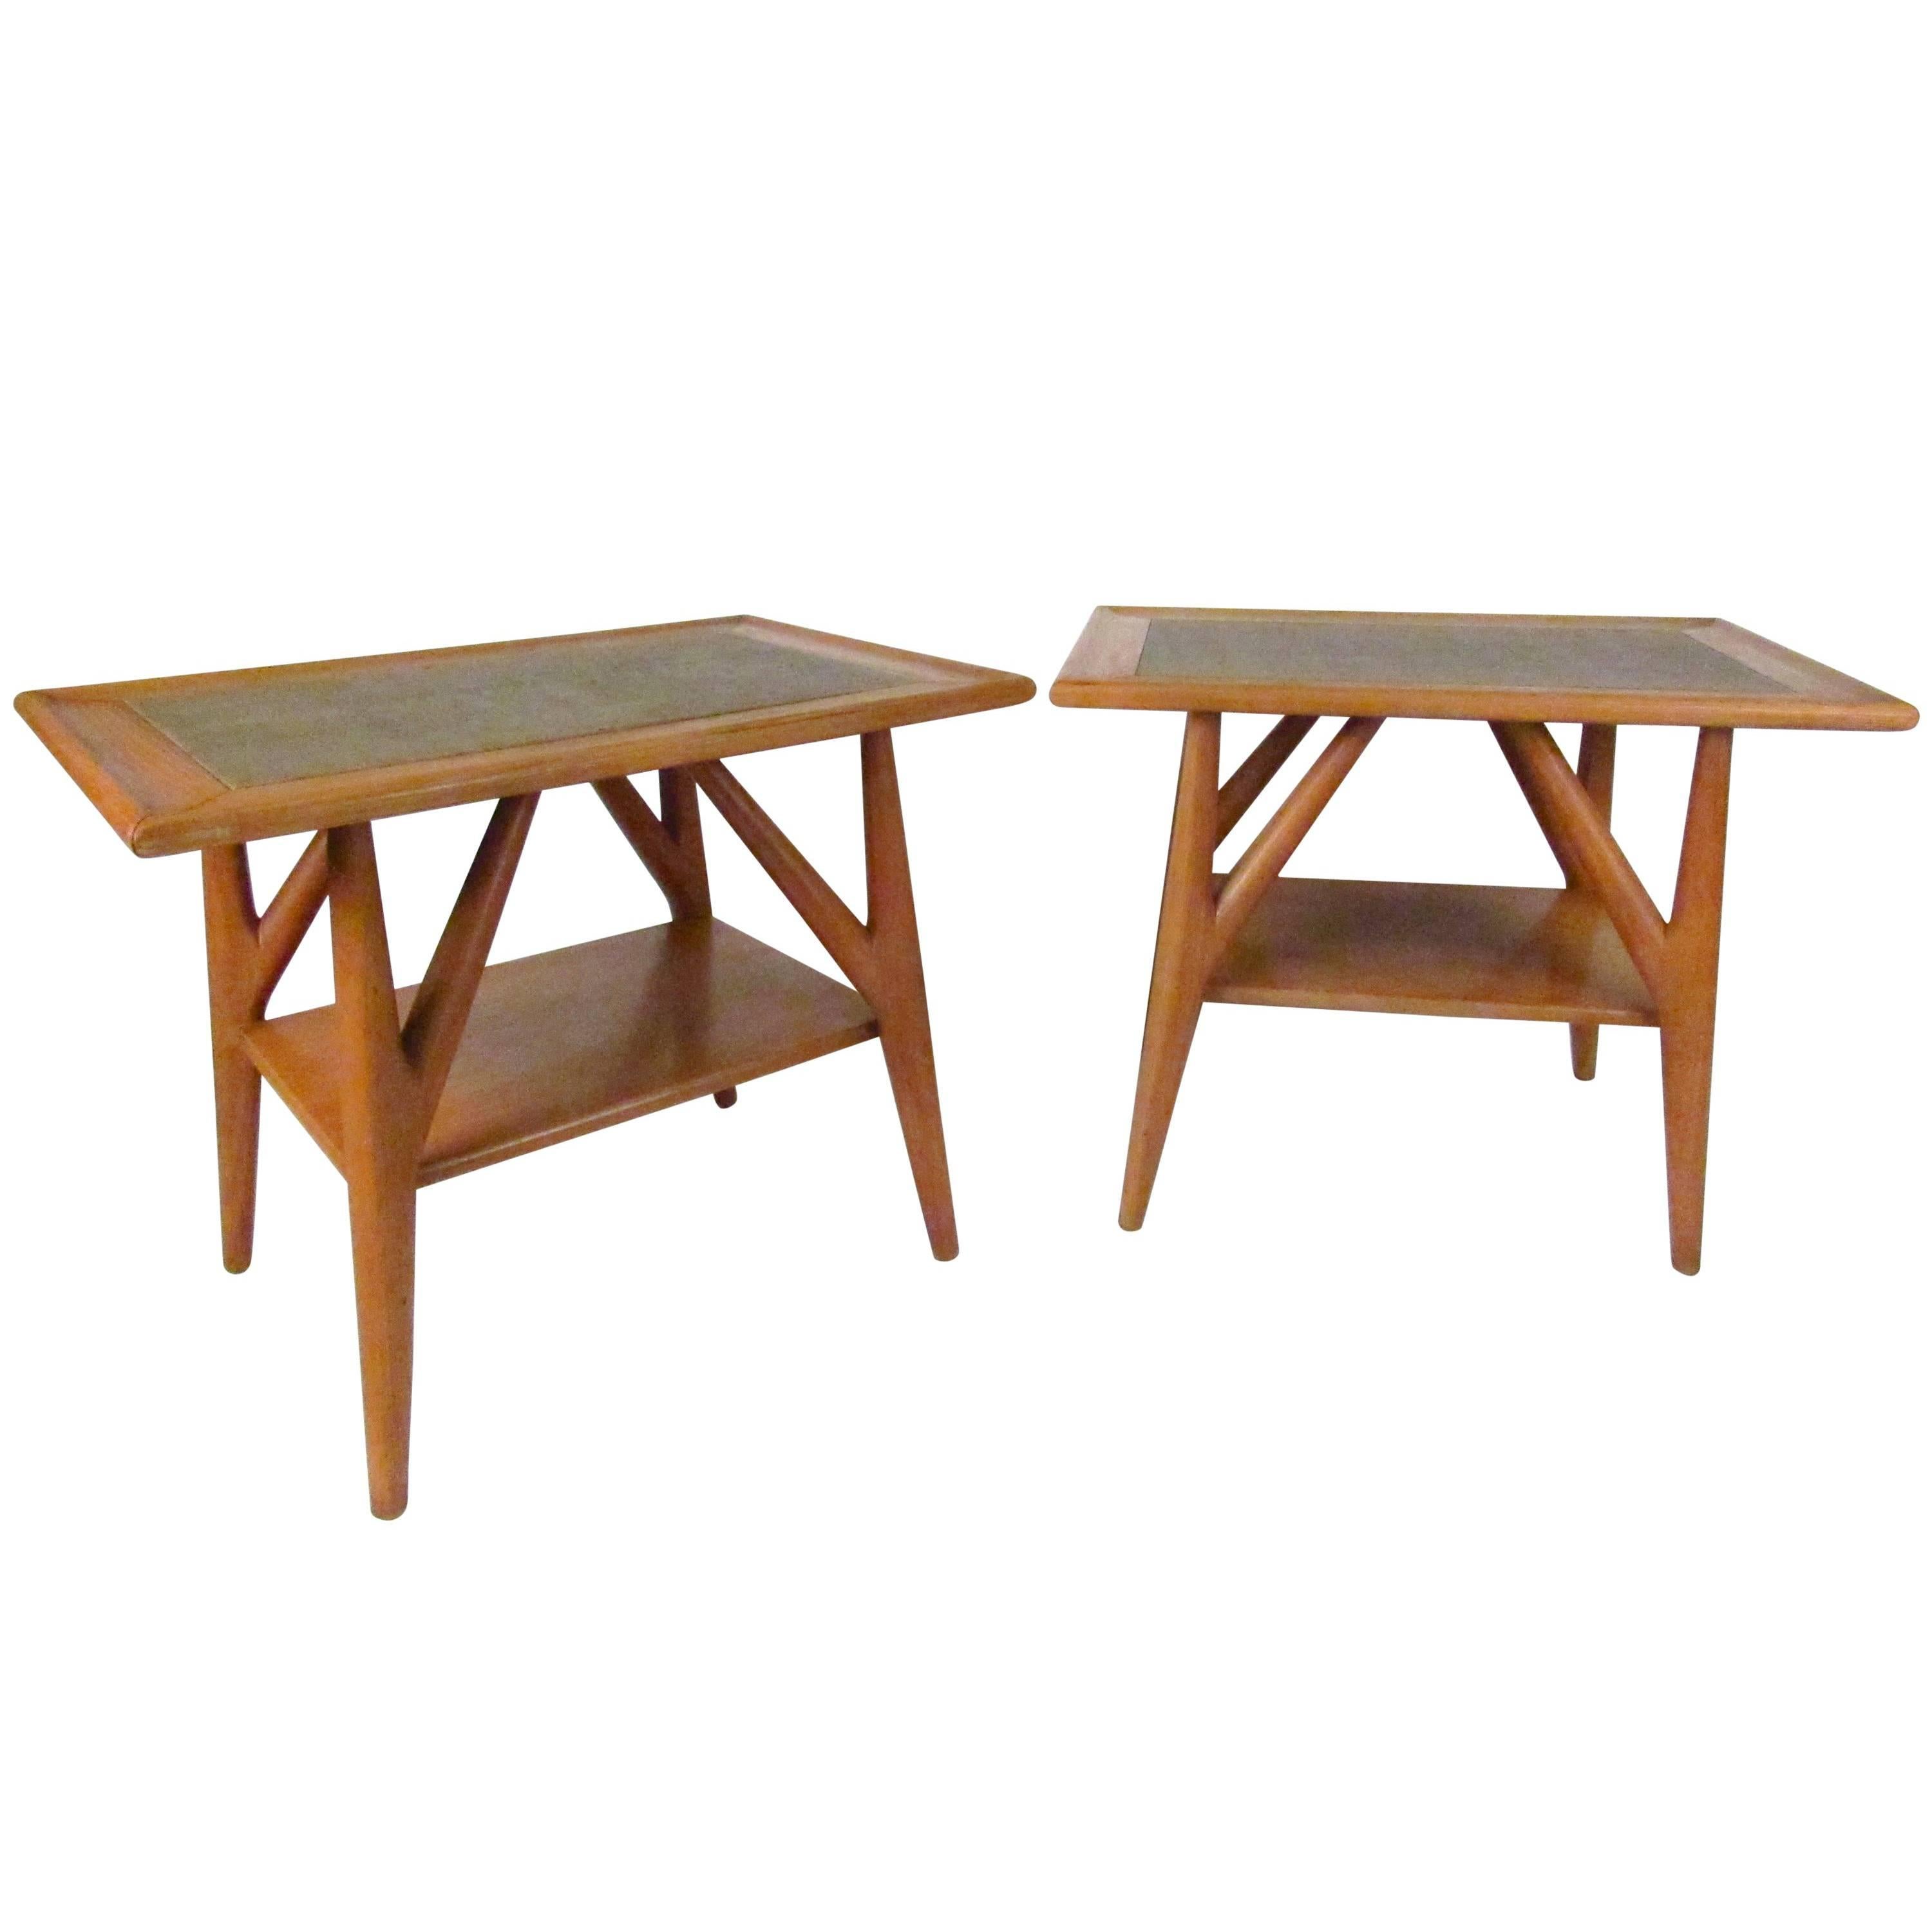 Mid-Century Jack Van der Molen Designed Side Tables